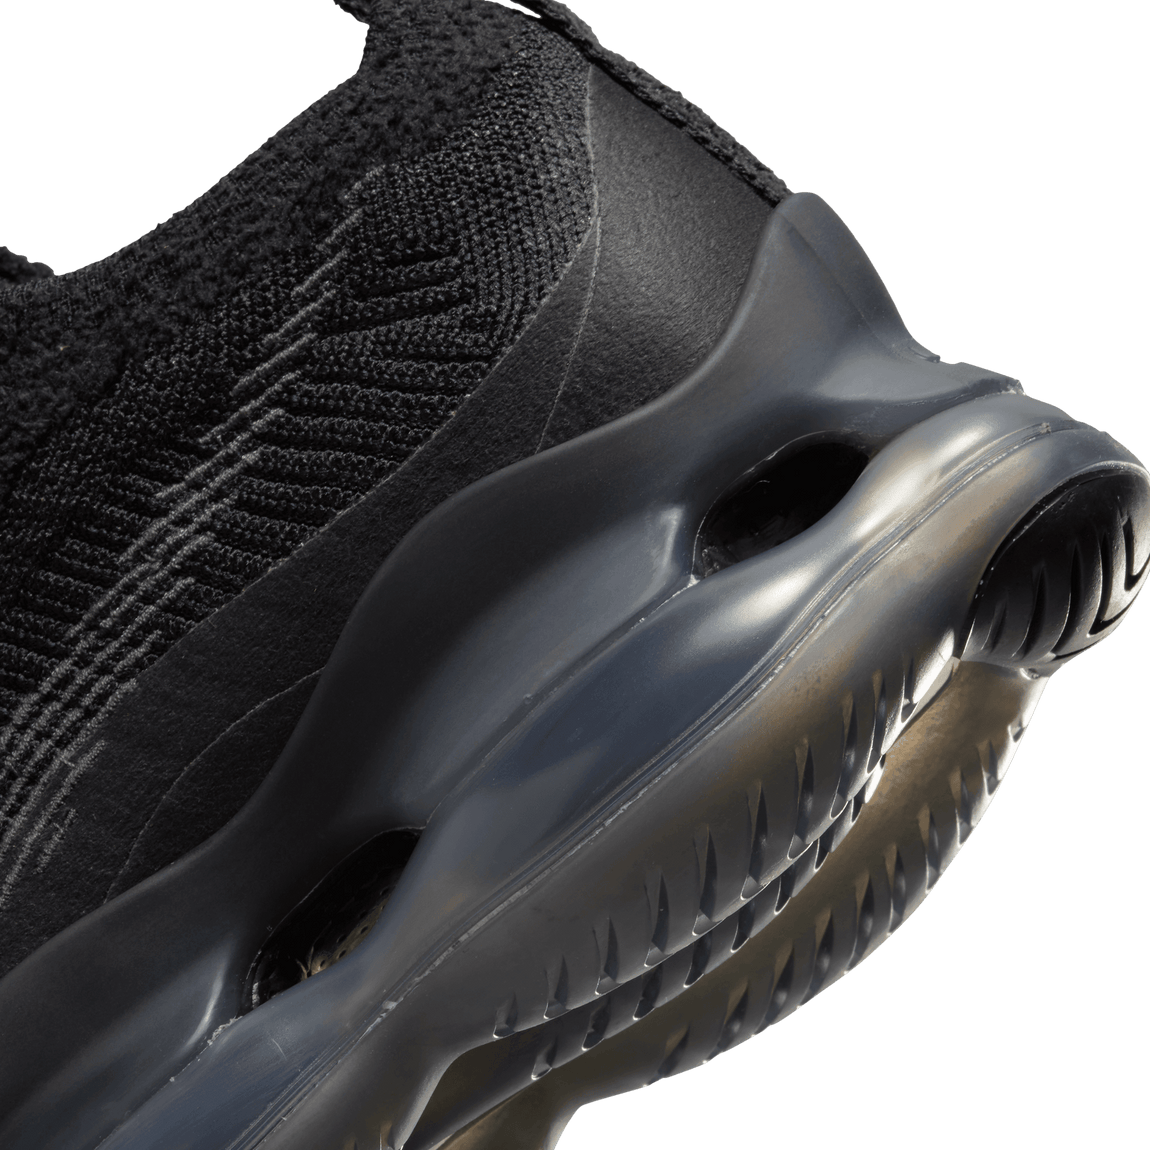 Women's Nike Air Max Scorpion Flyknit (Black/Anthracite-Black) - Women's Nike Air Max Scorpion Flyknit (Black/Anthracite-Black) - 